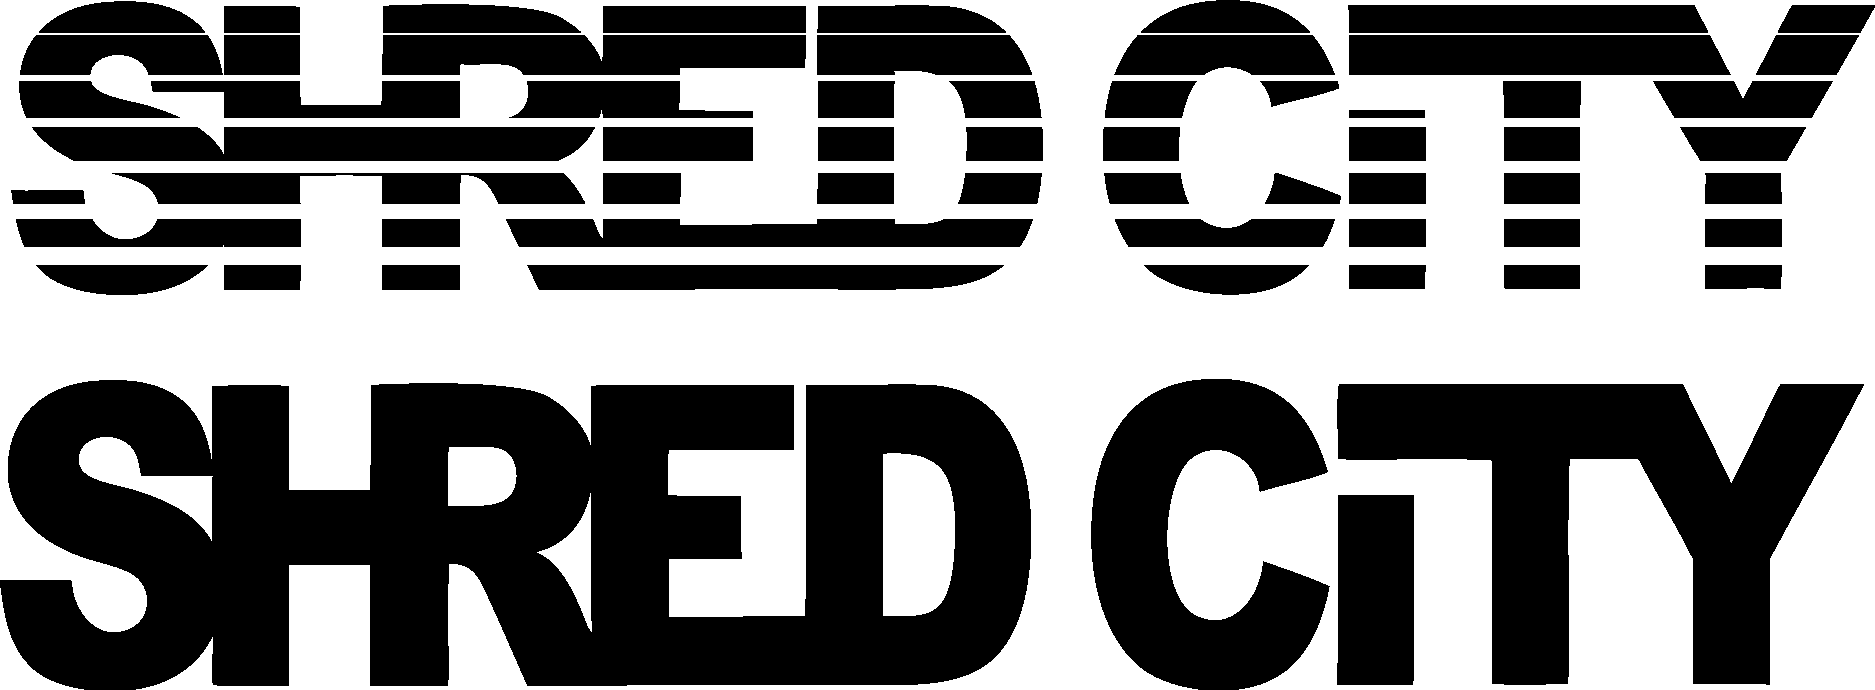 Shred City Logo Vector